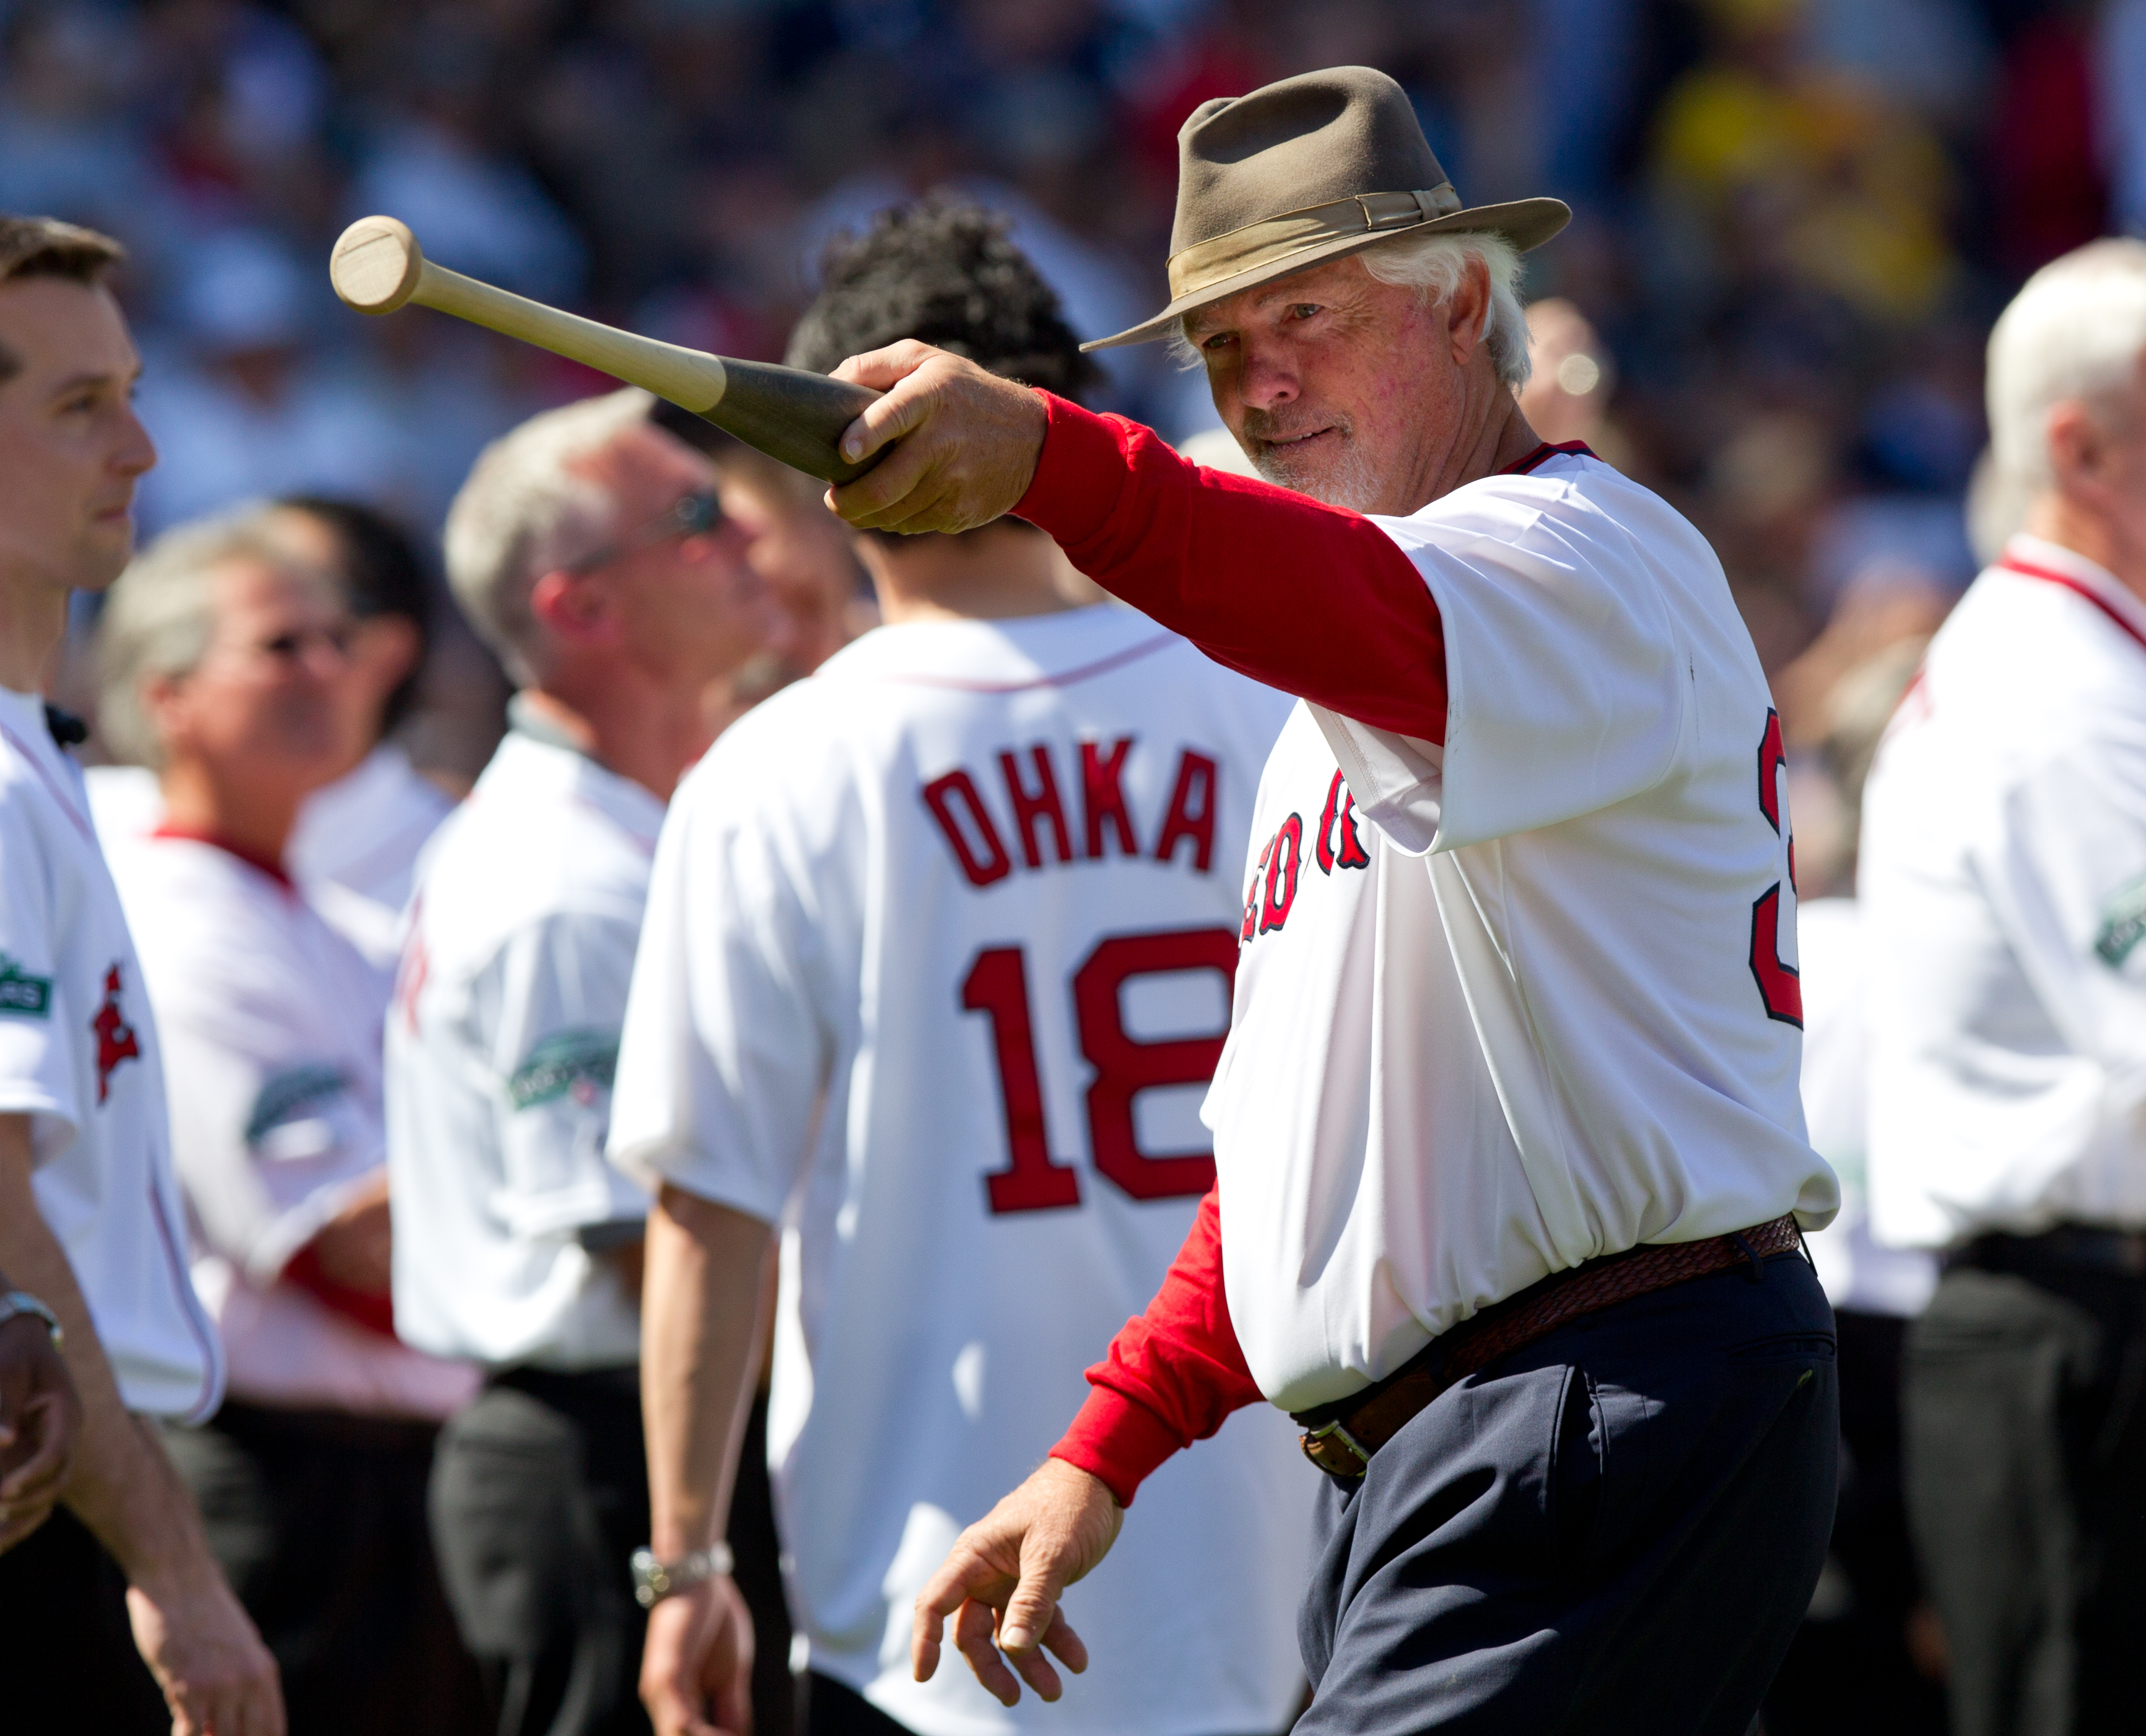 Former Boston Red Sox pitcher Bill 